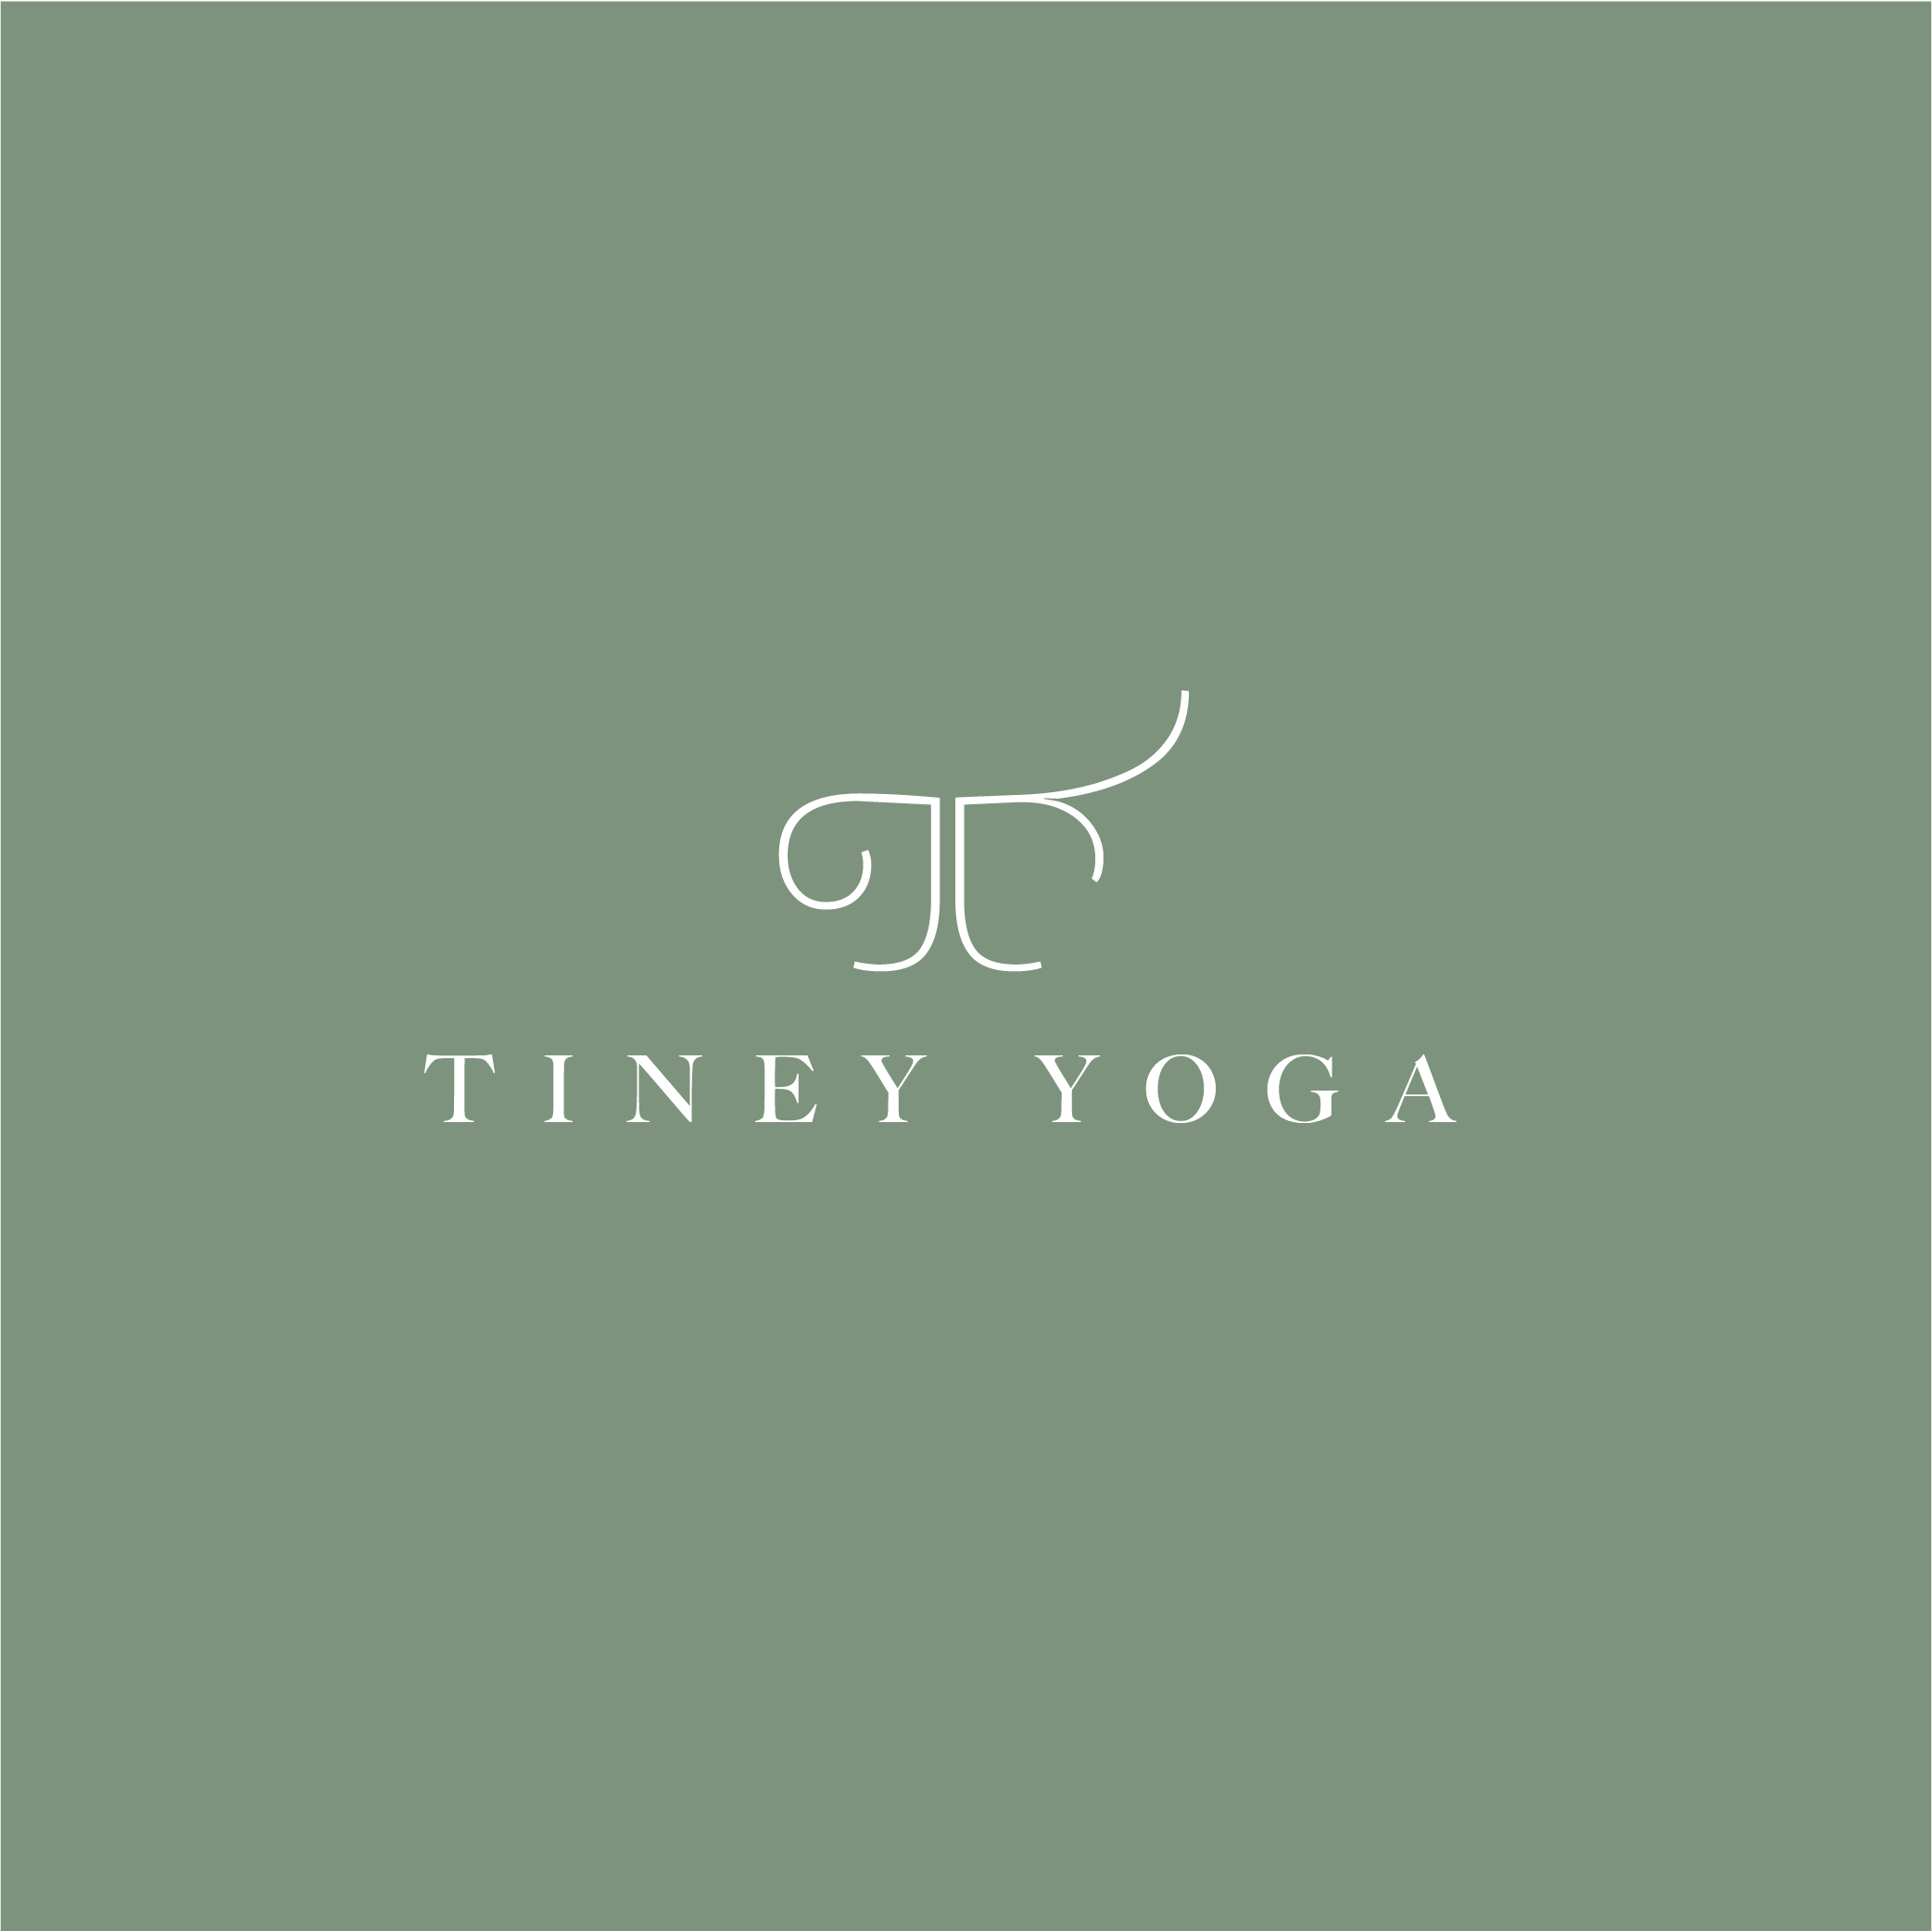 steven cote graphic design logo branding visual communication tiney yoga